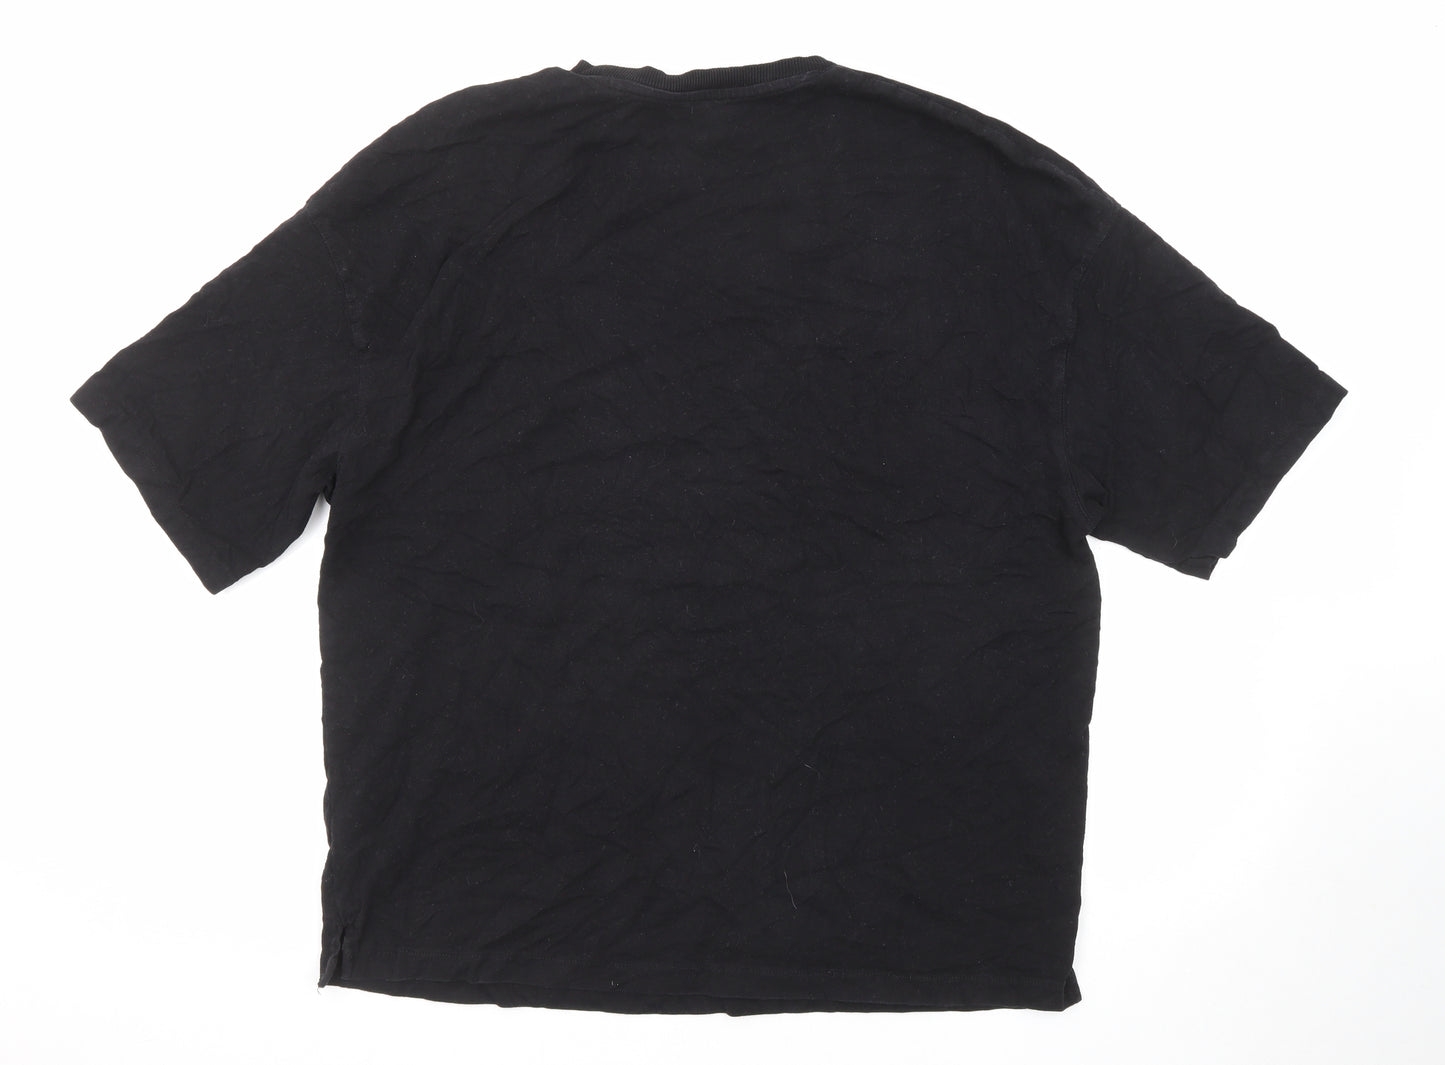 Bershka Mens Black Cotton T-Shirt Size XL Round Neck